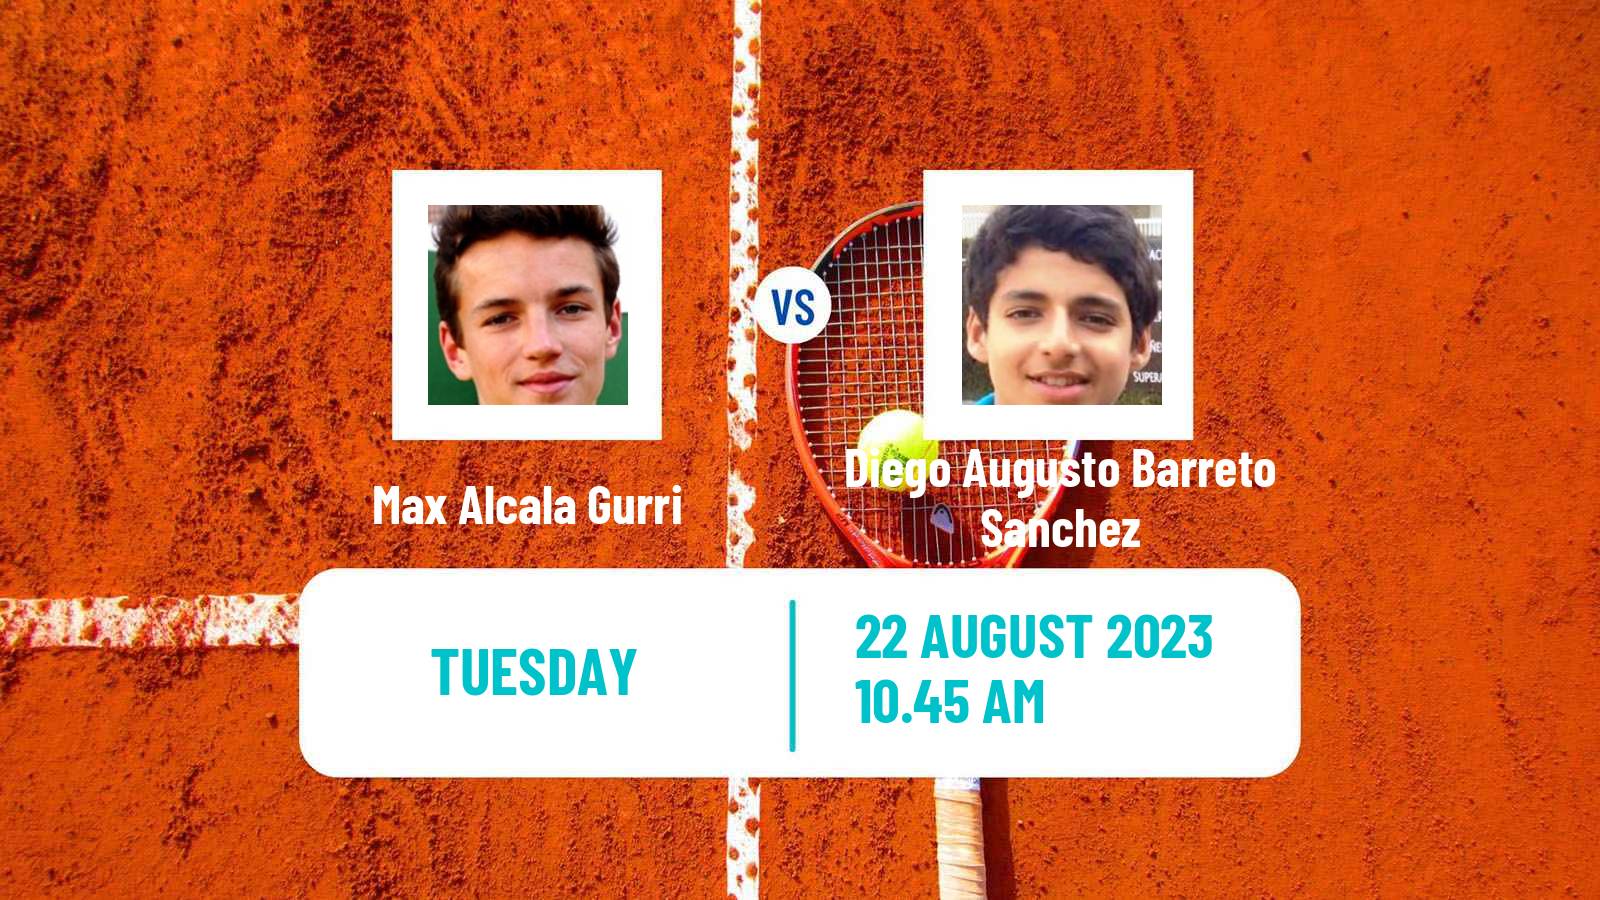 Tennis ITF M25 Santander Men Max Alcala Gurri - Diego Augusto Barreto Sanchez